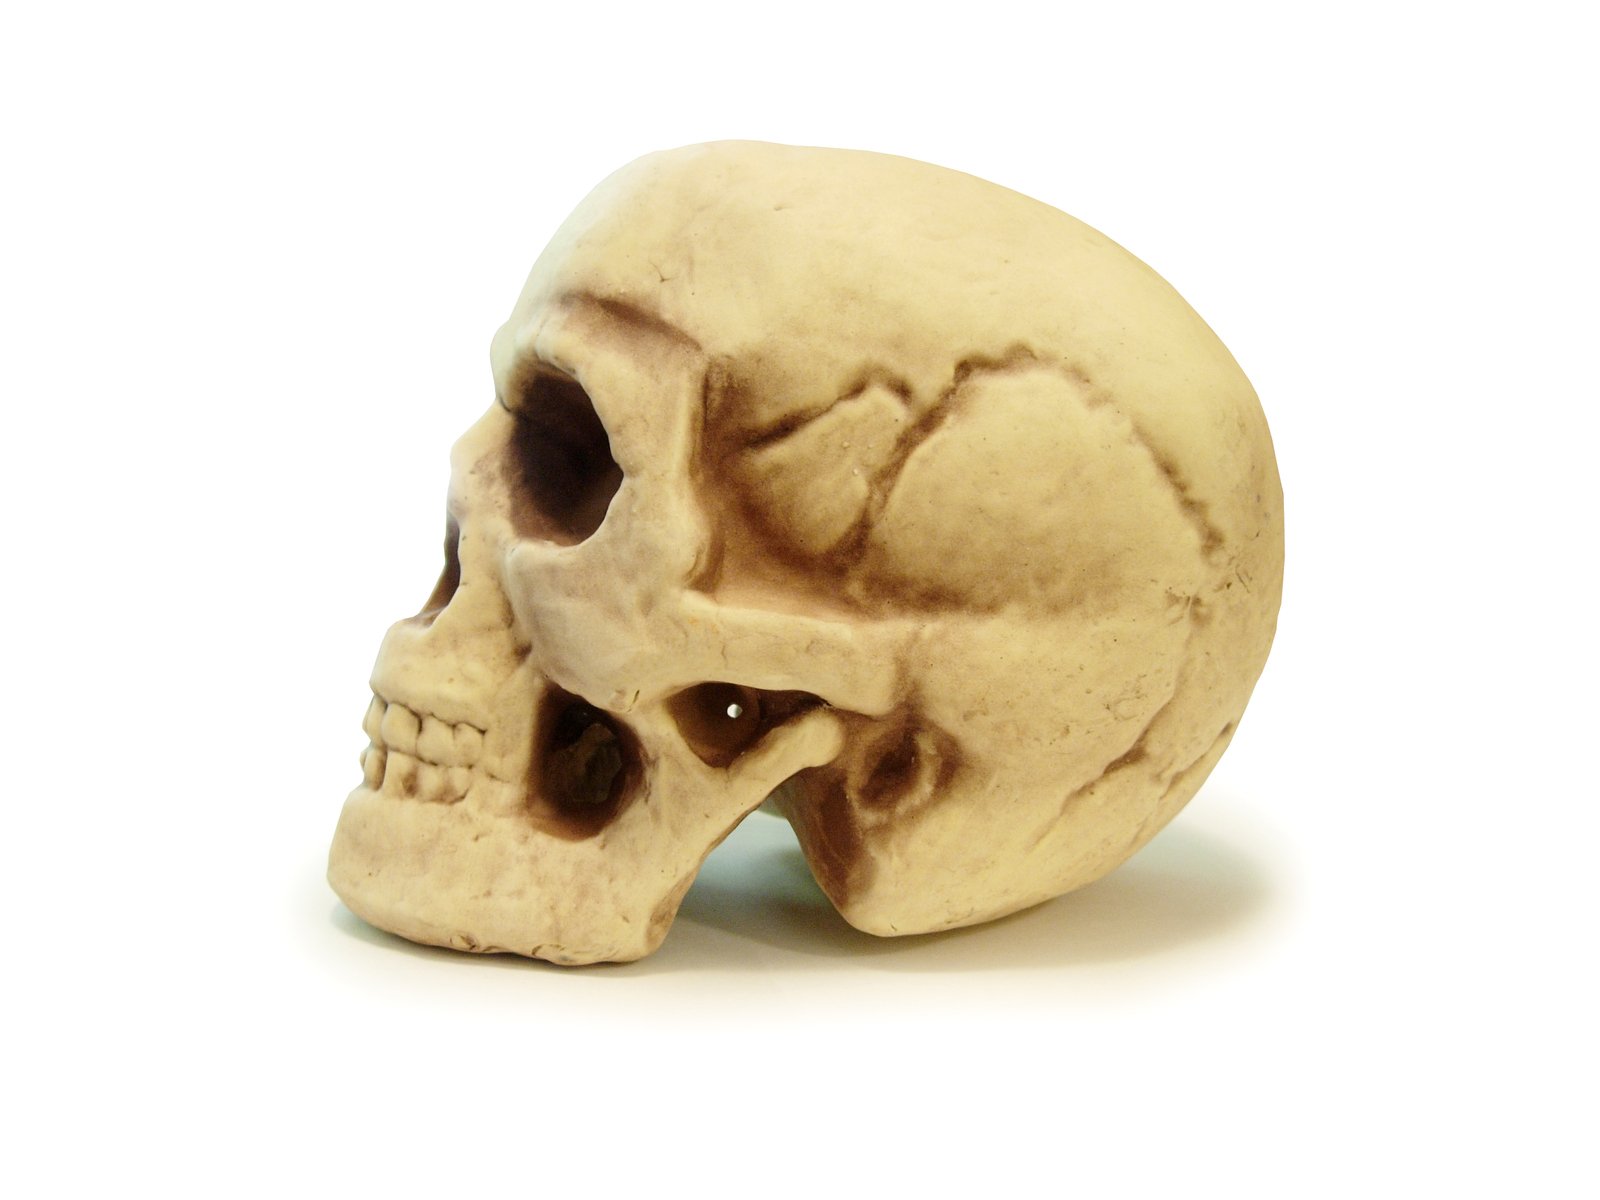 a model of the skull of a skeleton